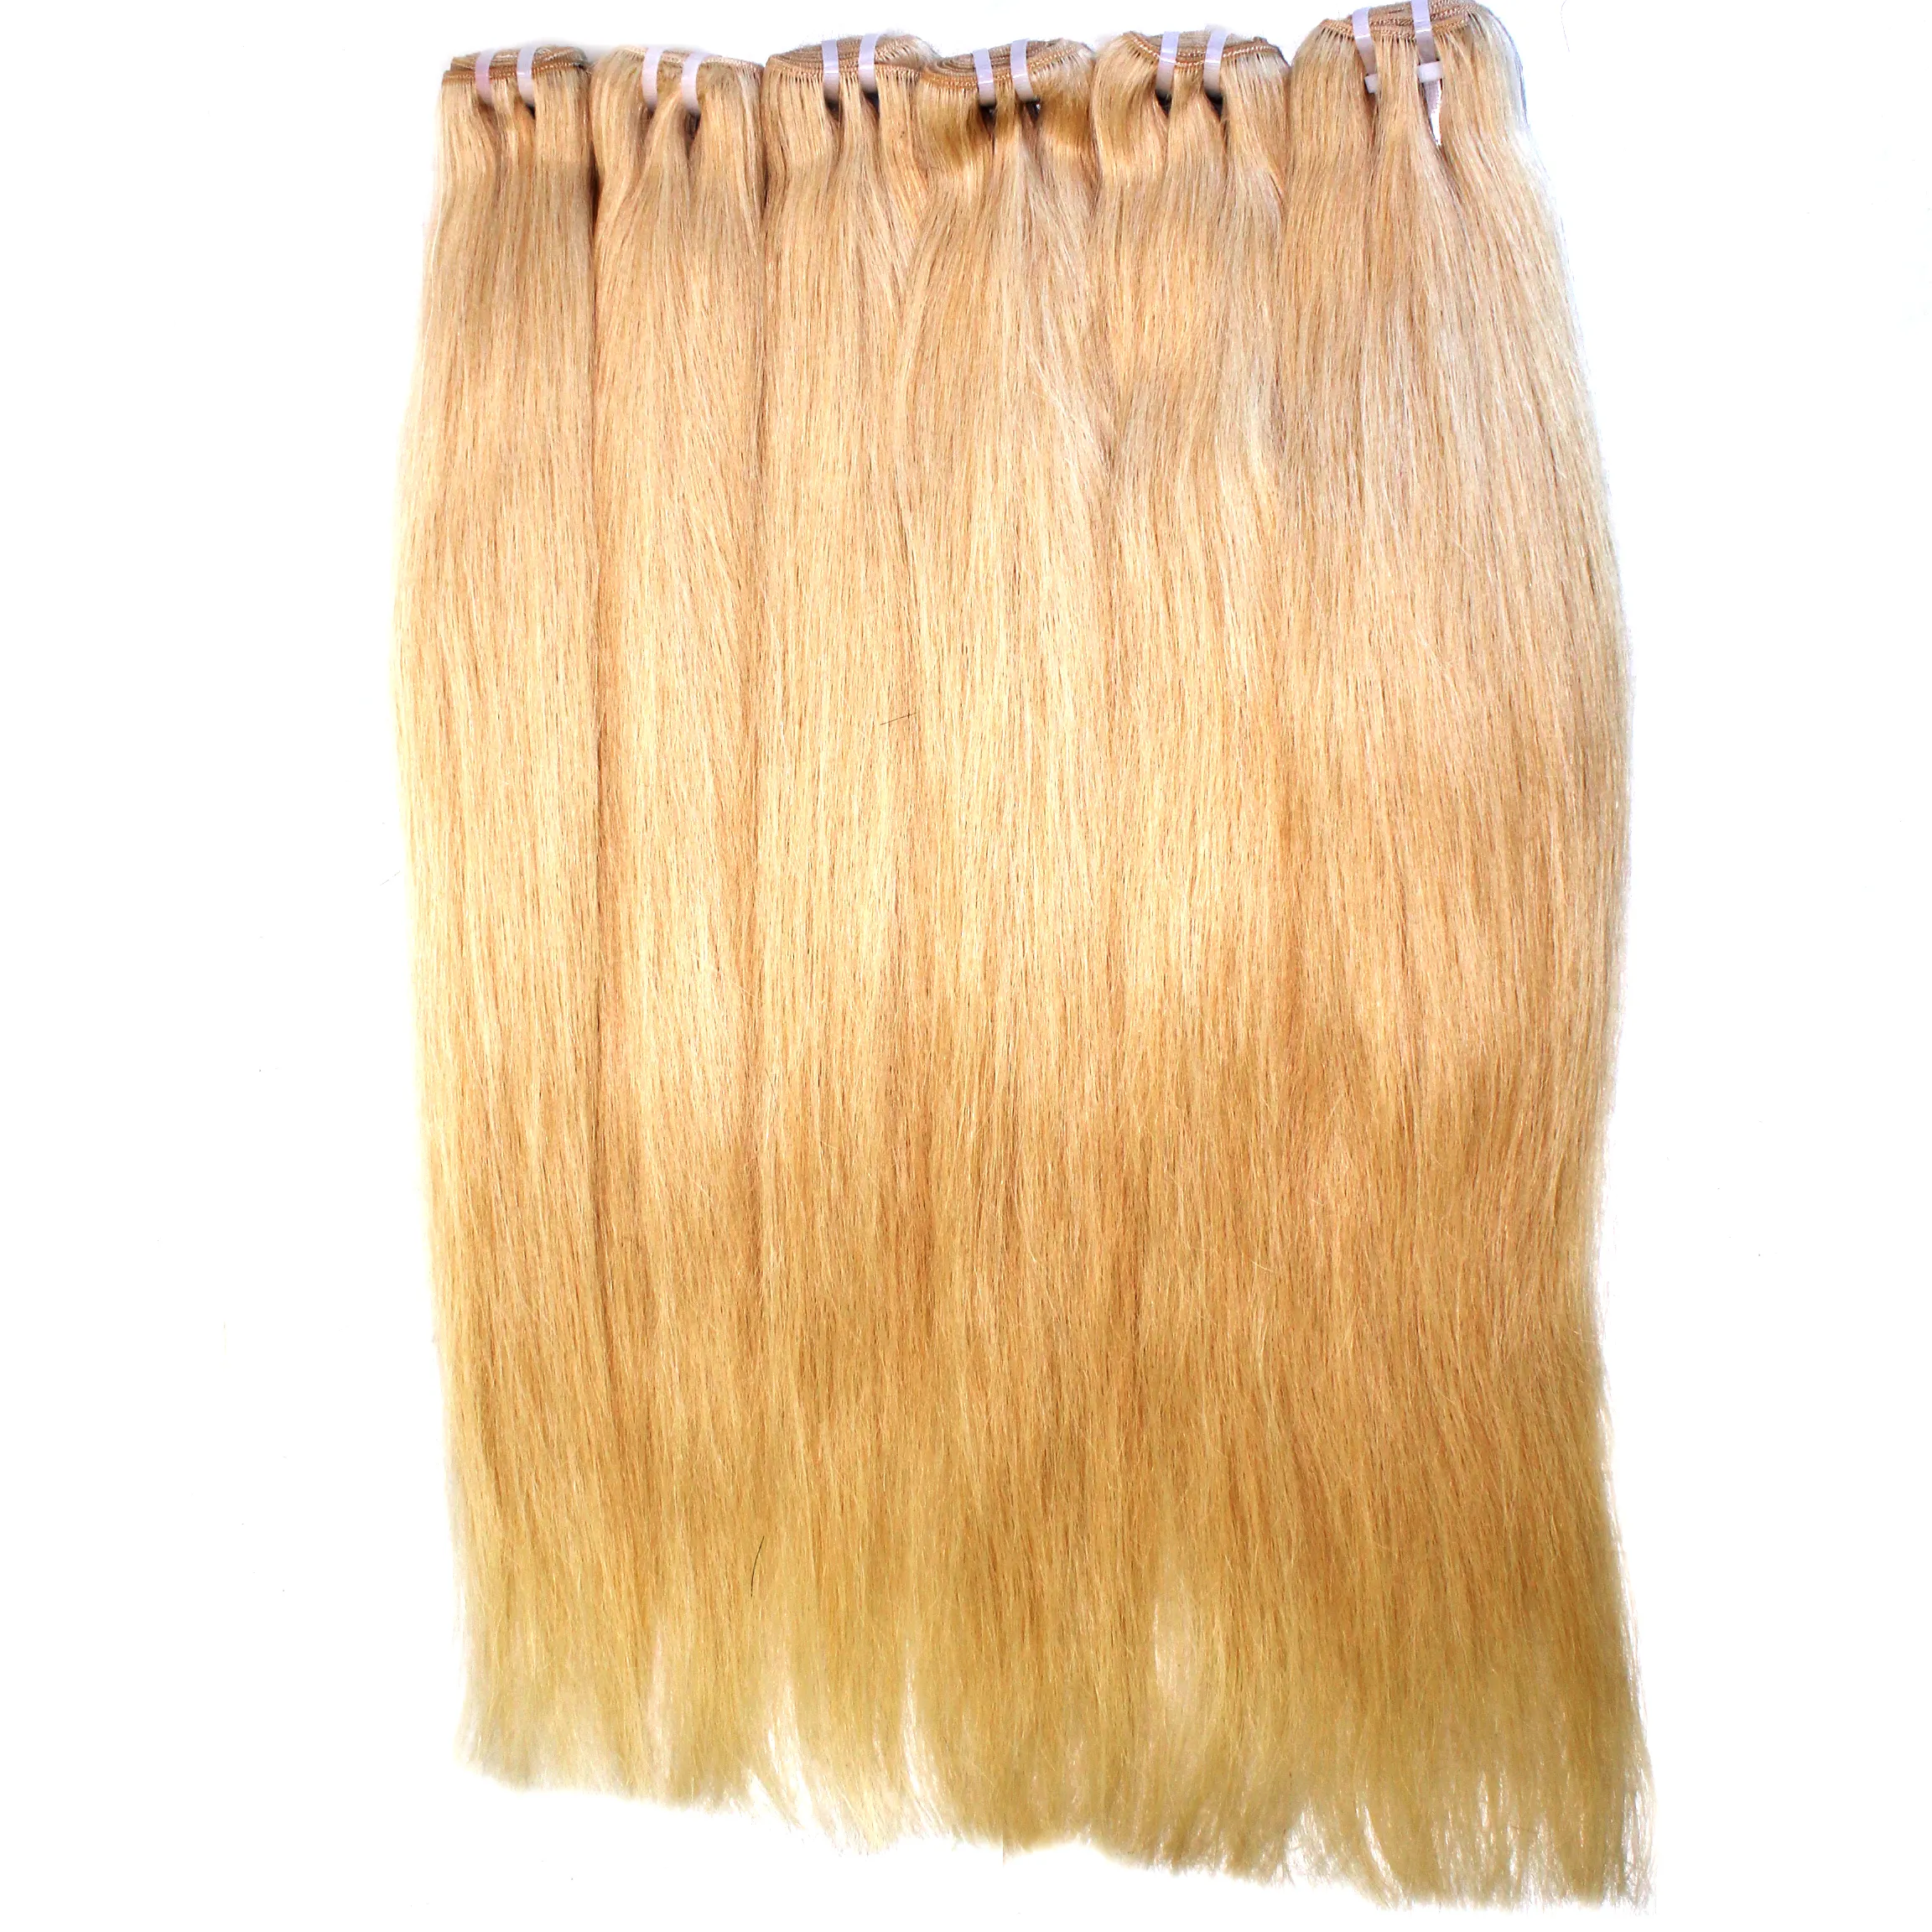 Extensión de cabello de trama suave atada a mano 100% cabello humano, proveedor más barato que vendió la extensión de cabello más virgen Rubio ondulado